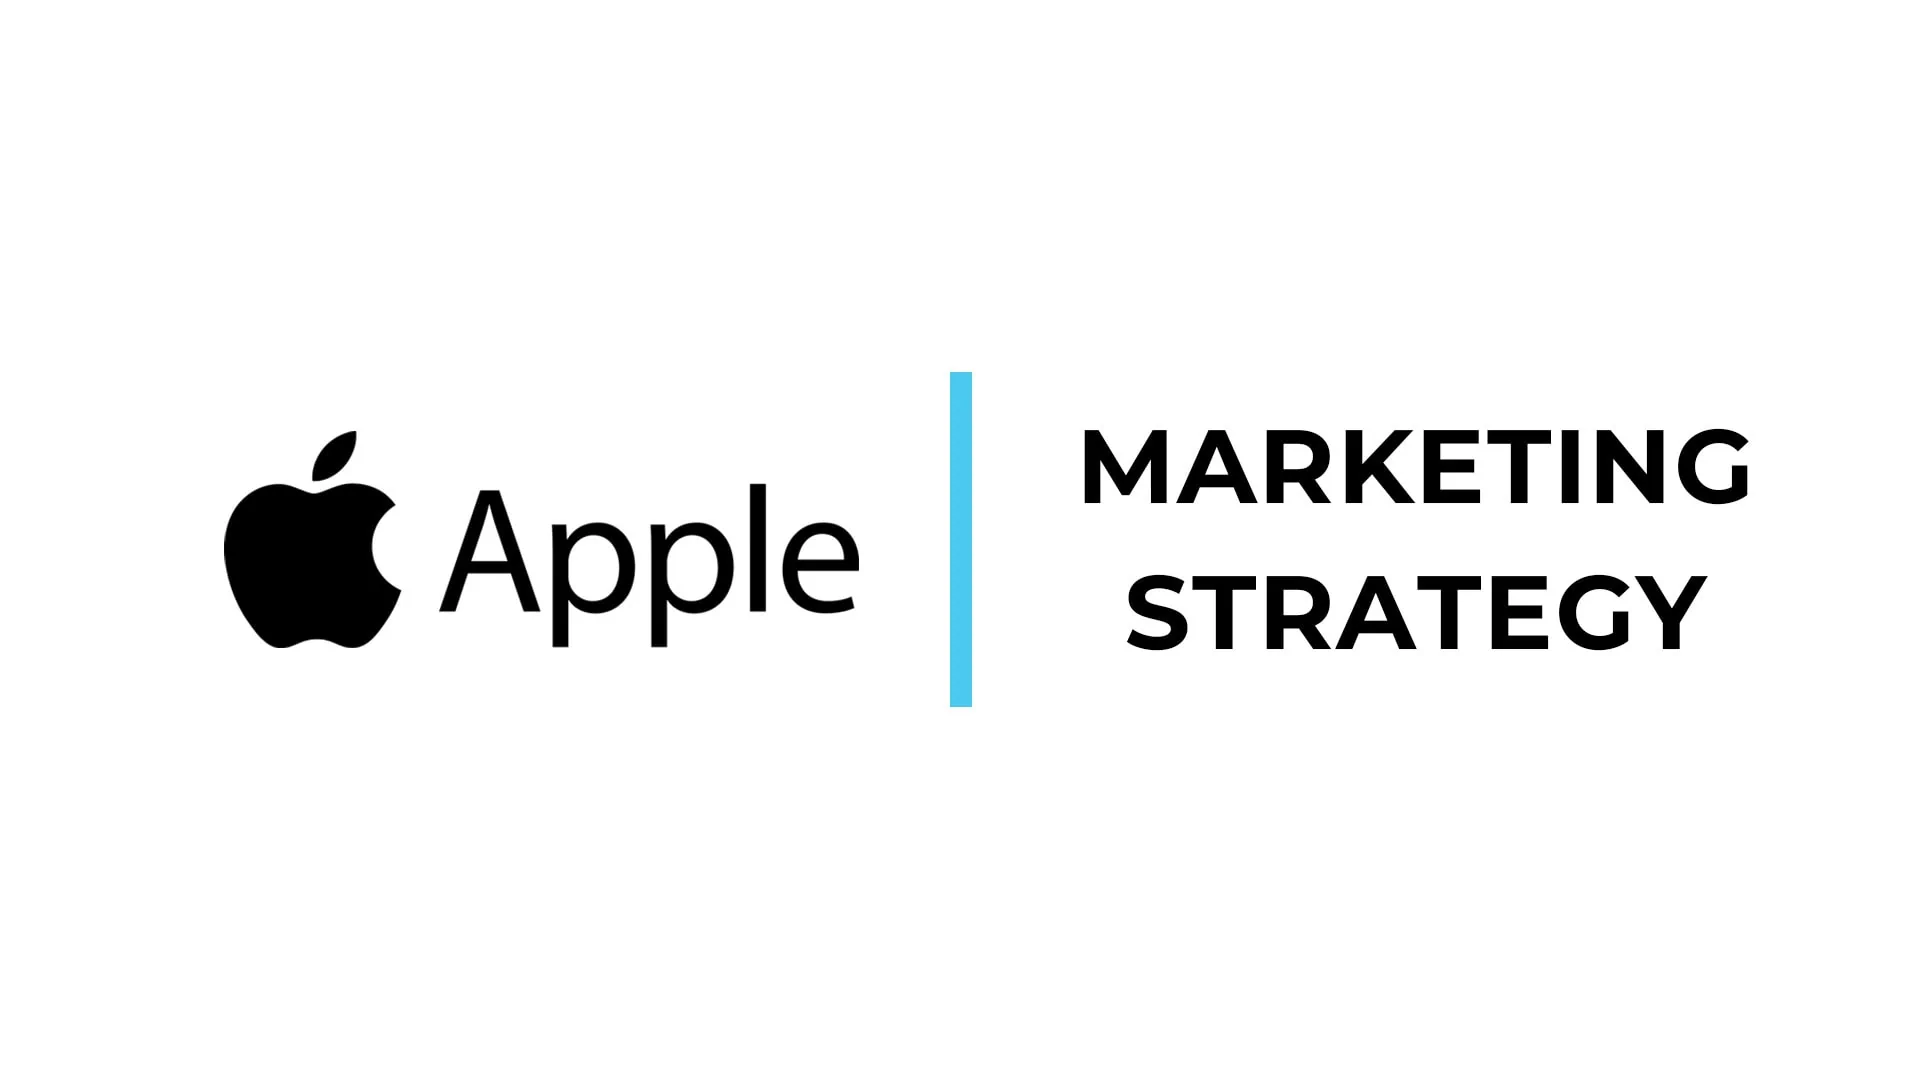 Apple Marketing Strategy